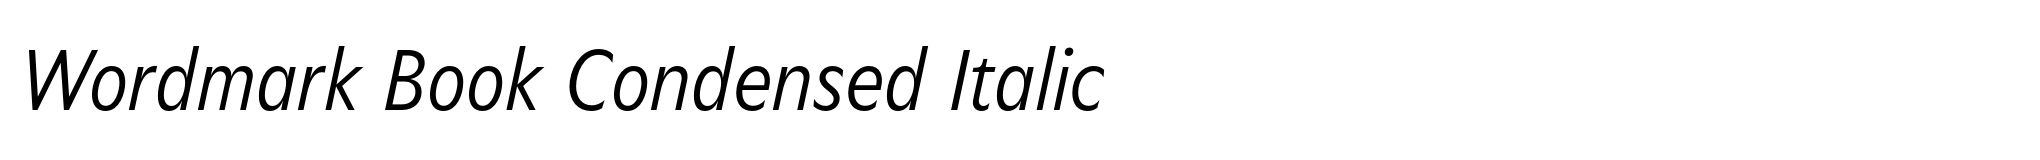 Wordmark Book Condensed Italic image